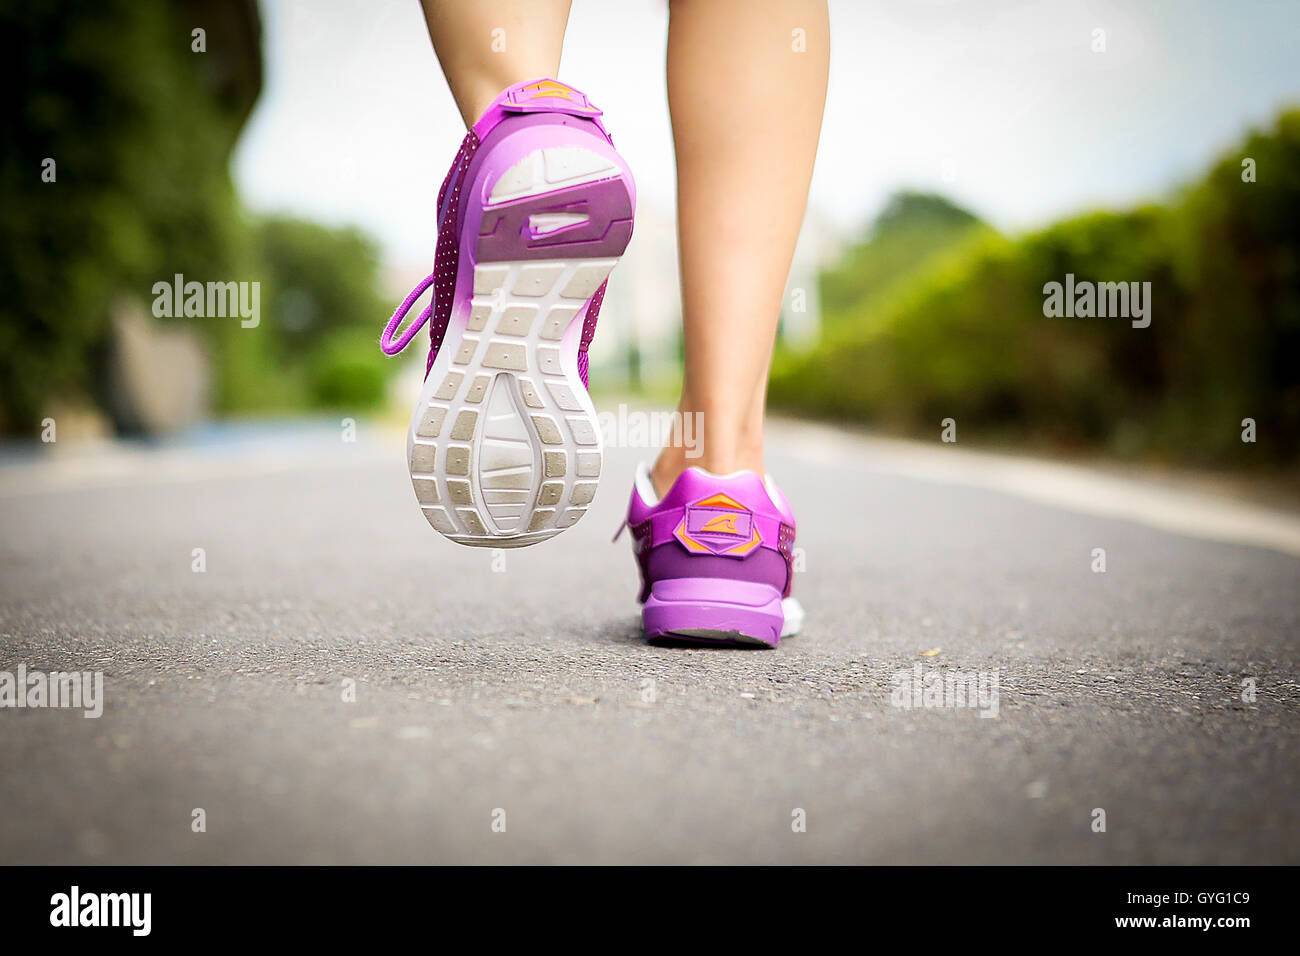 Athlete runner feet running on road closeup on shoe. woman fitness jog workout wellness concept. Stock Photo